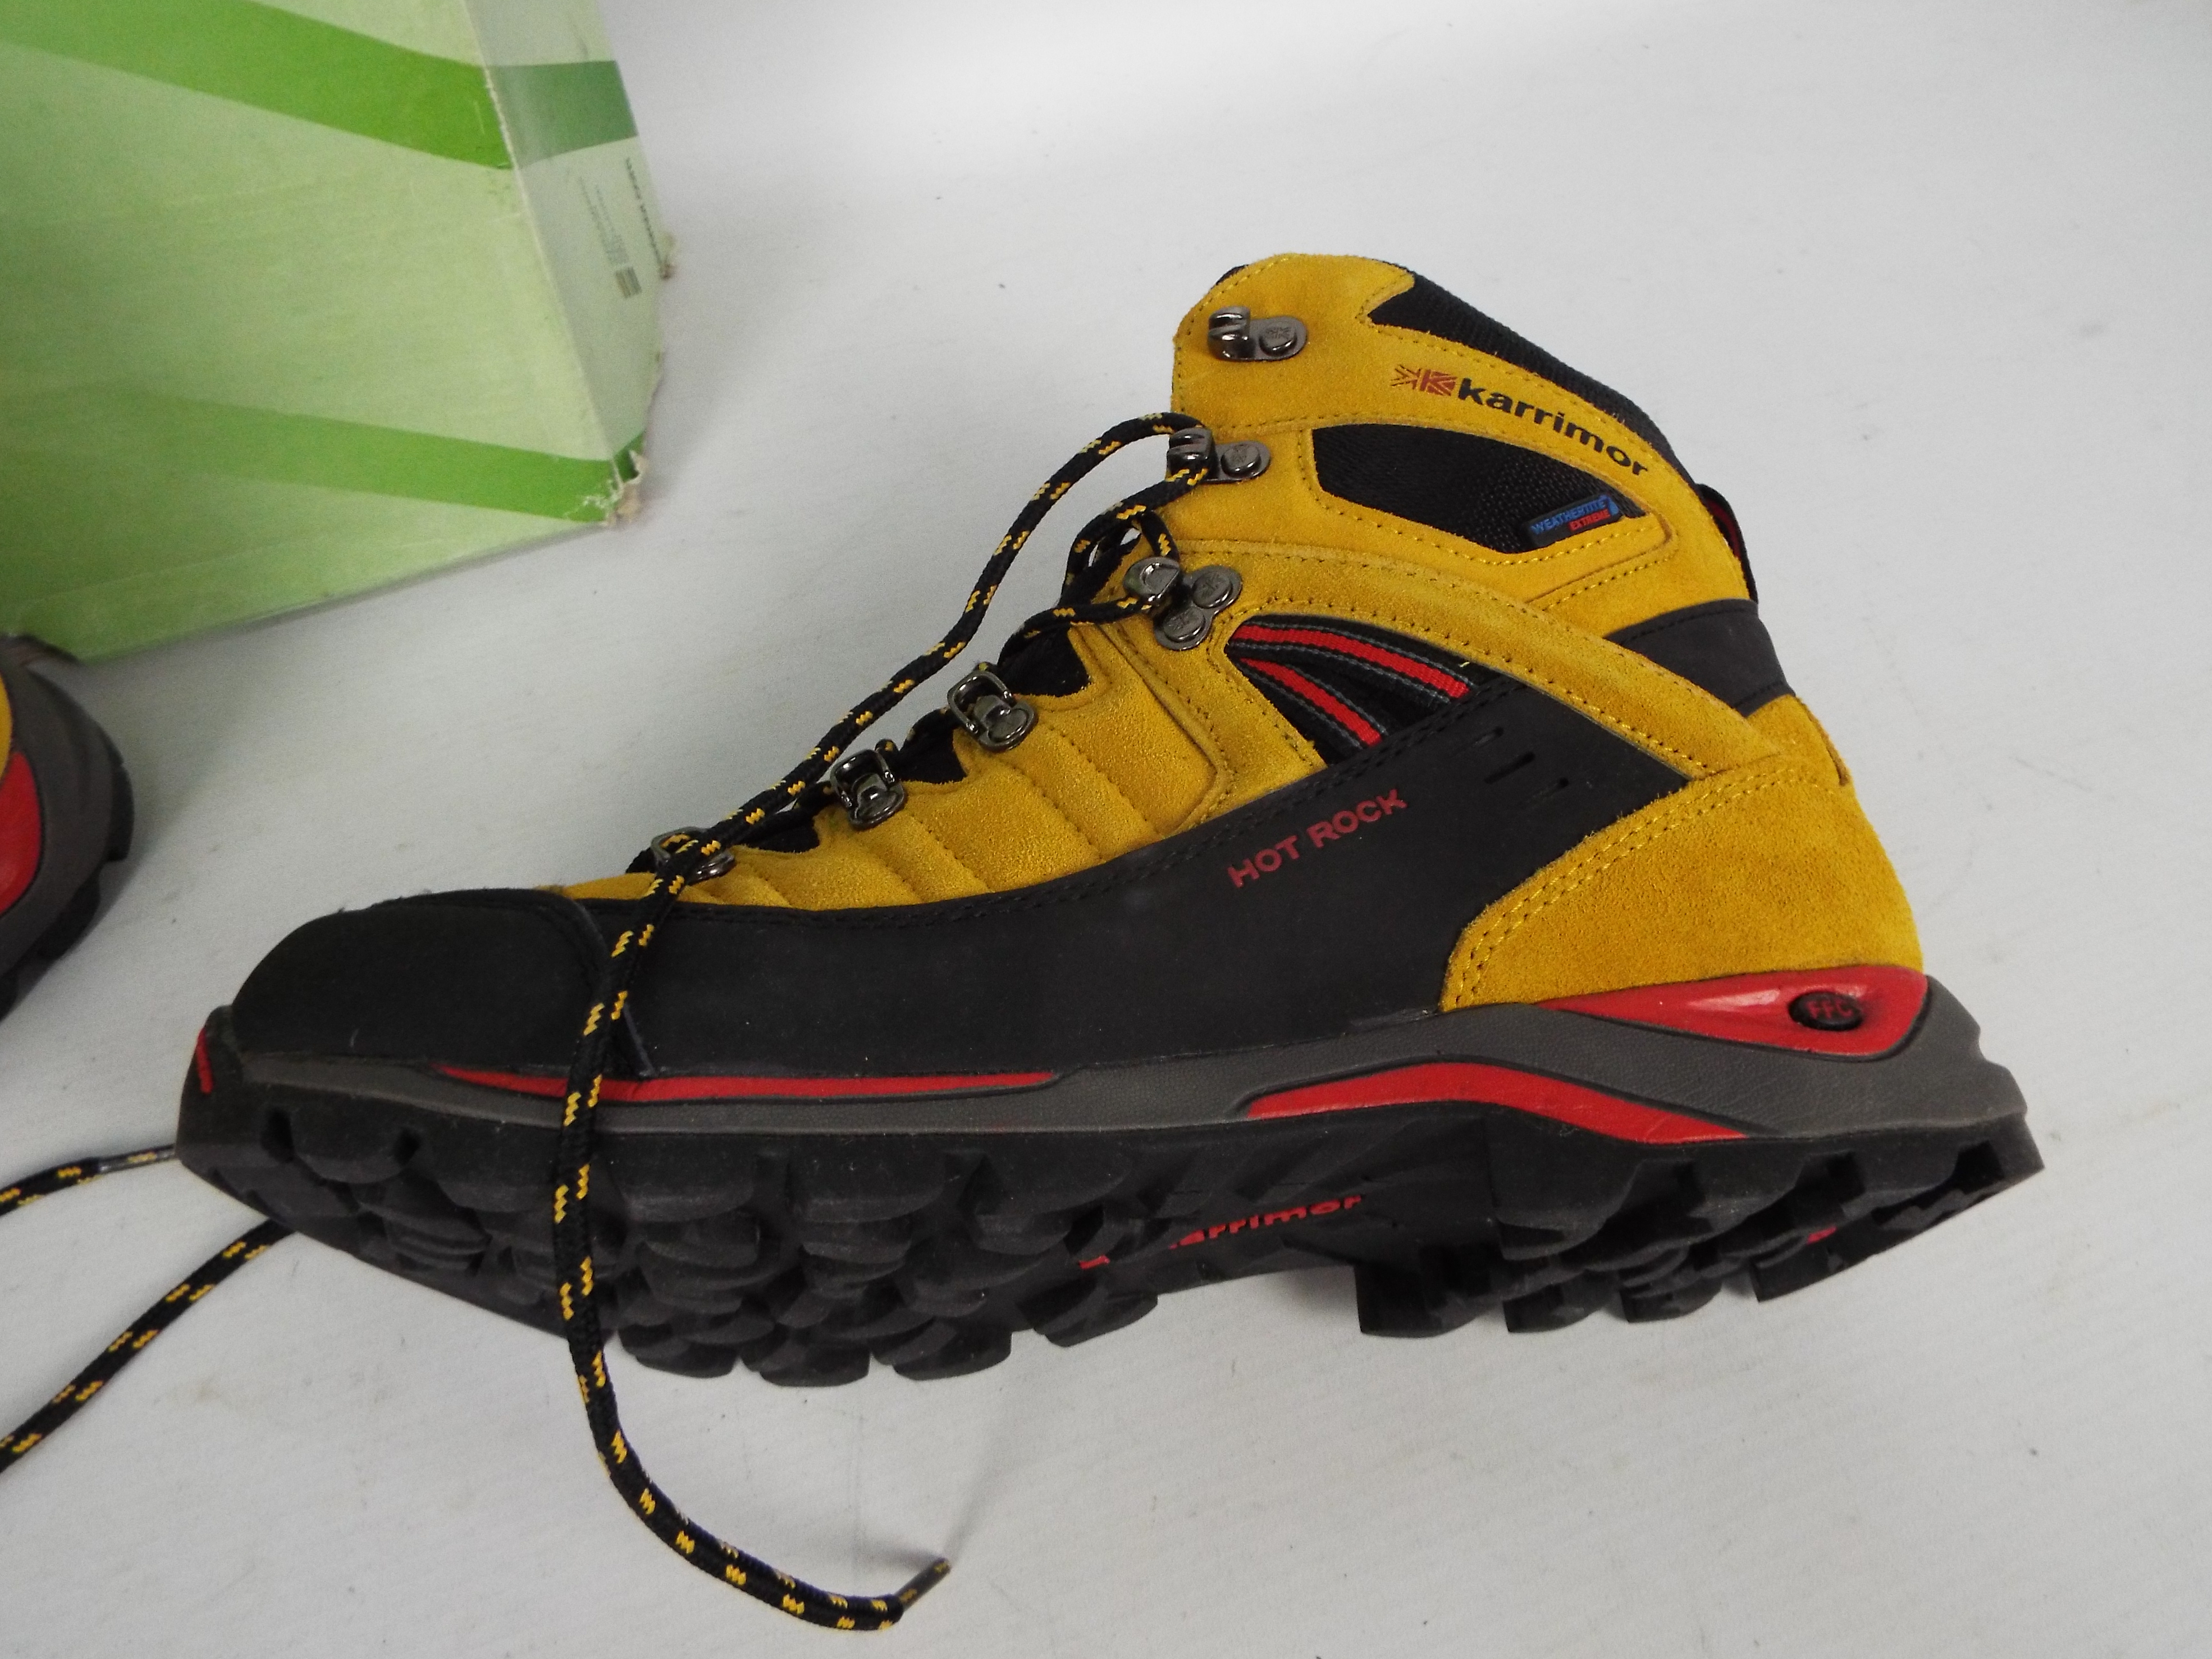 Karrimor Hot Rock Mid III weathertite XTR - a pair of yellowwalking boots, UK size 8. - Image 4 of 4